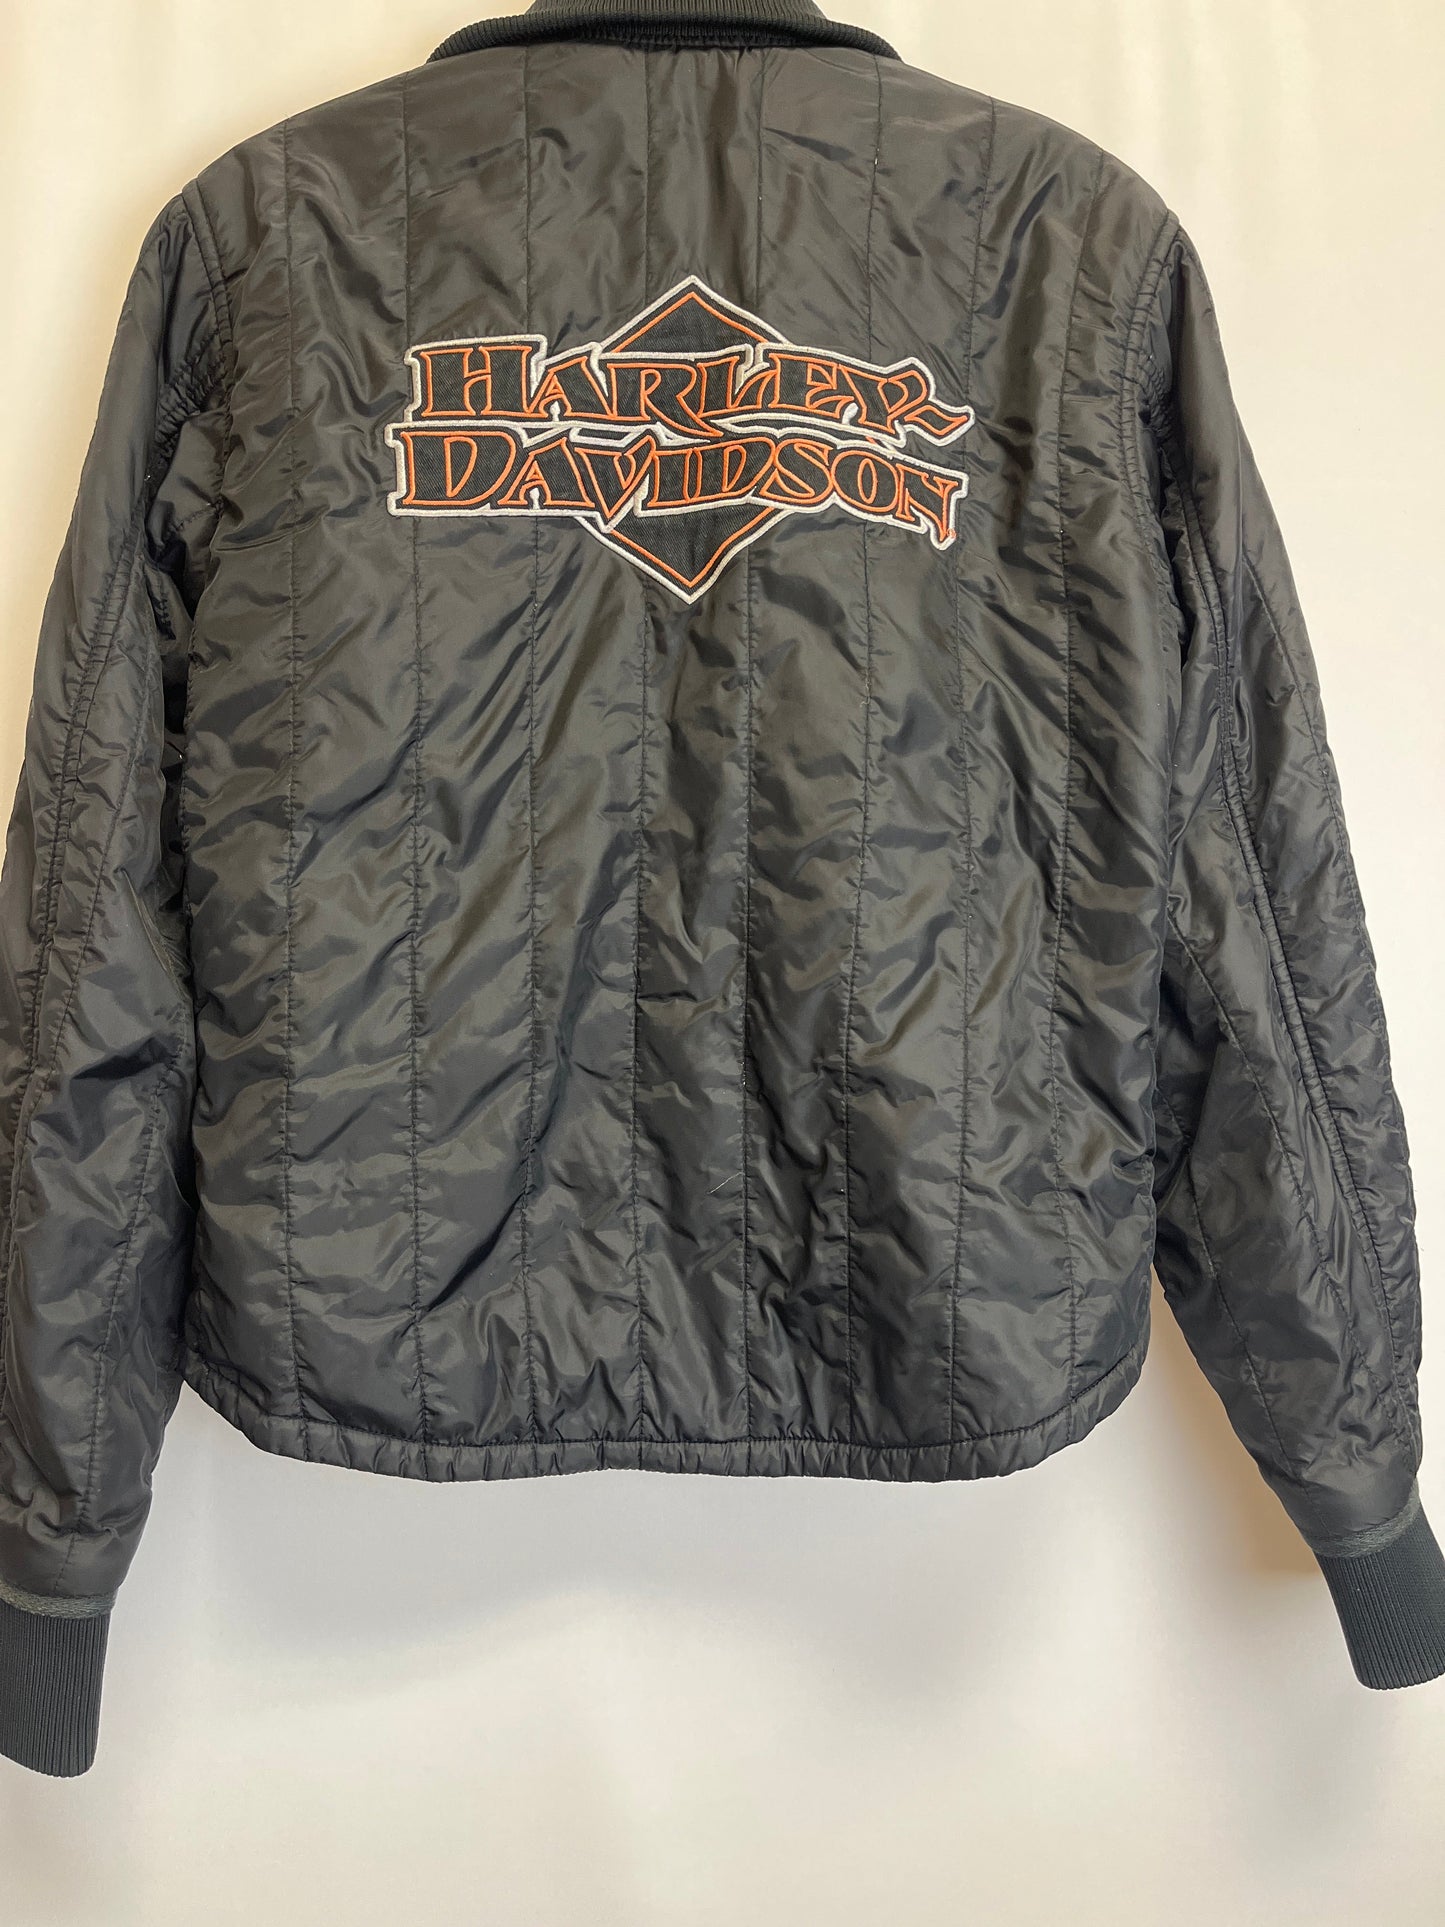 Jacket Other By Harley Davidson  Size: M